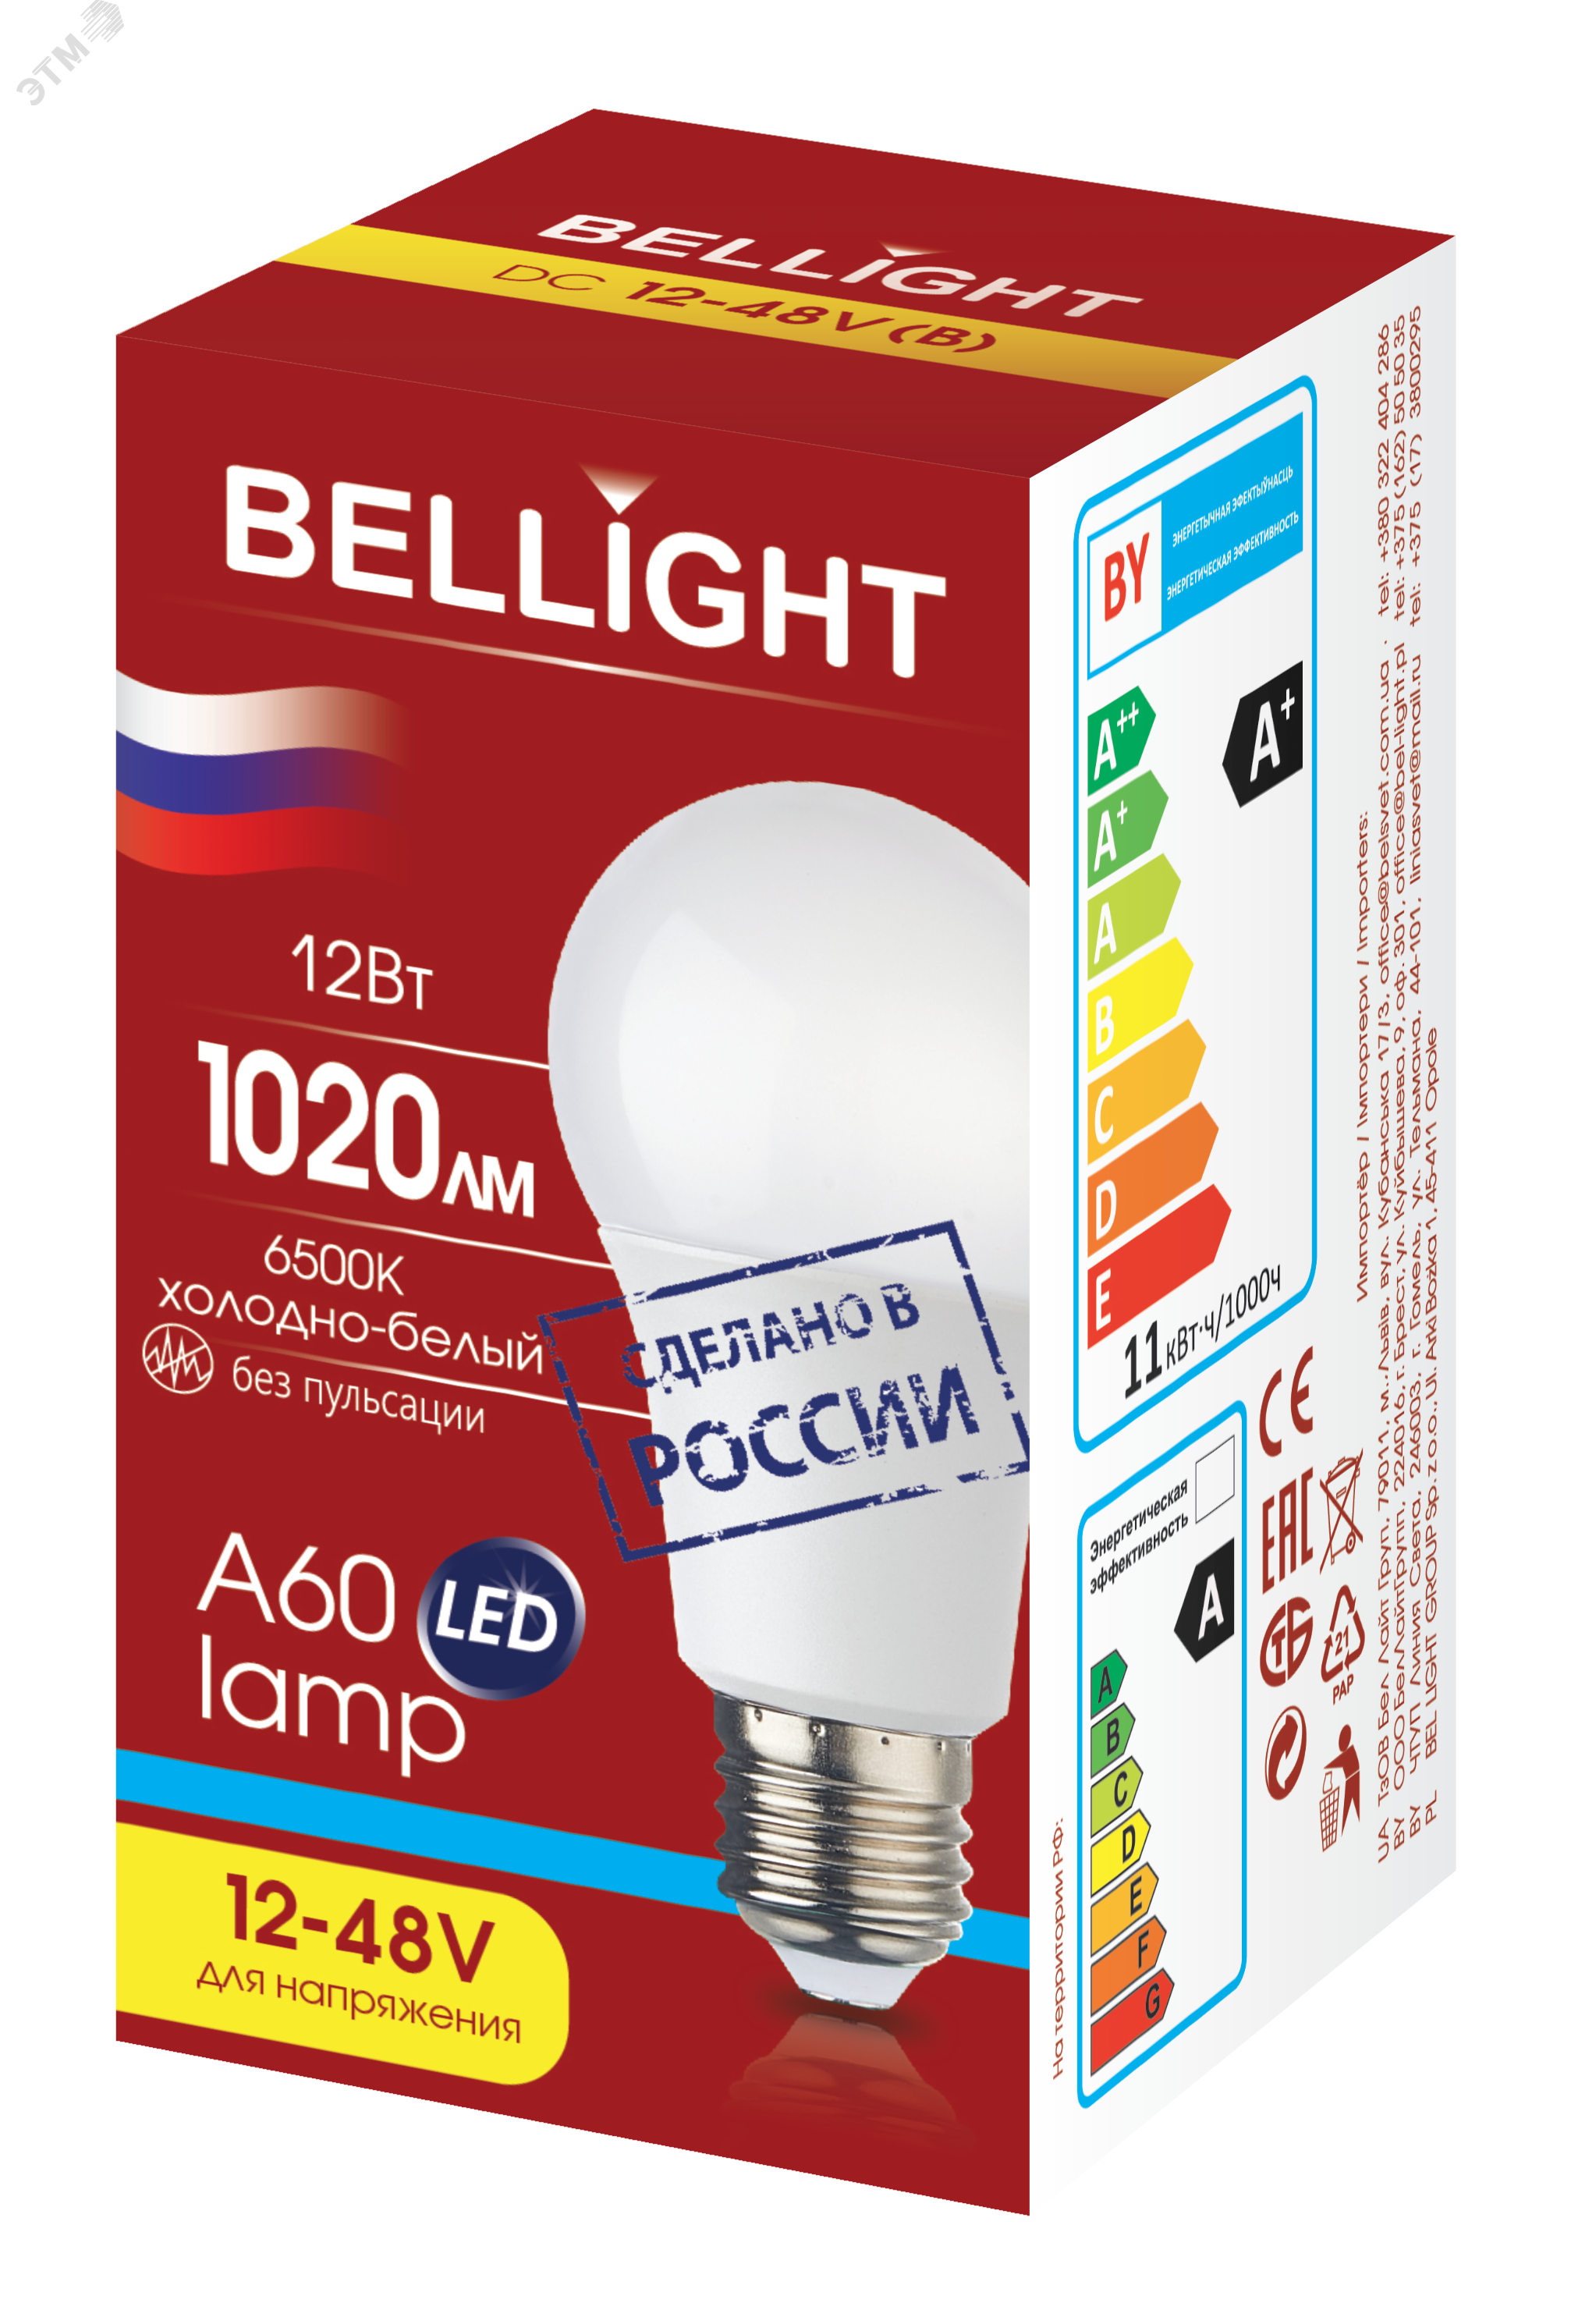 Лампа светодиодная LED A60 Е27 12W 12-48вольт 6500К 85637133 BELLIGHT